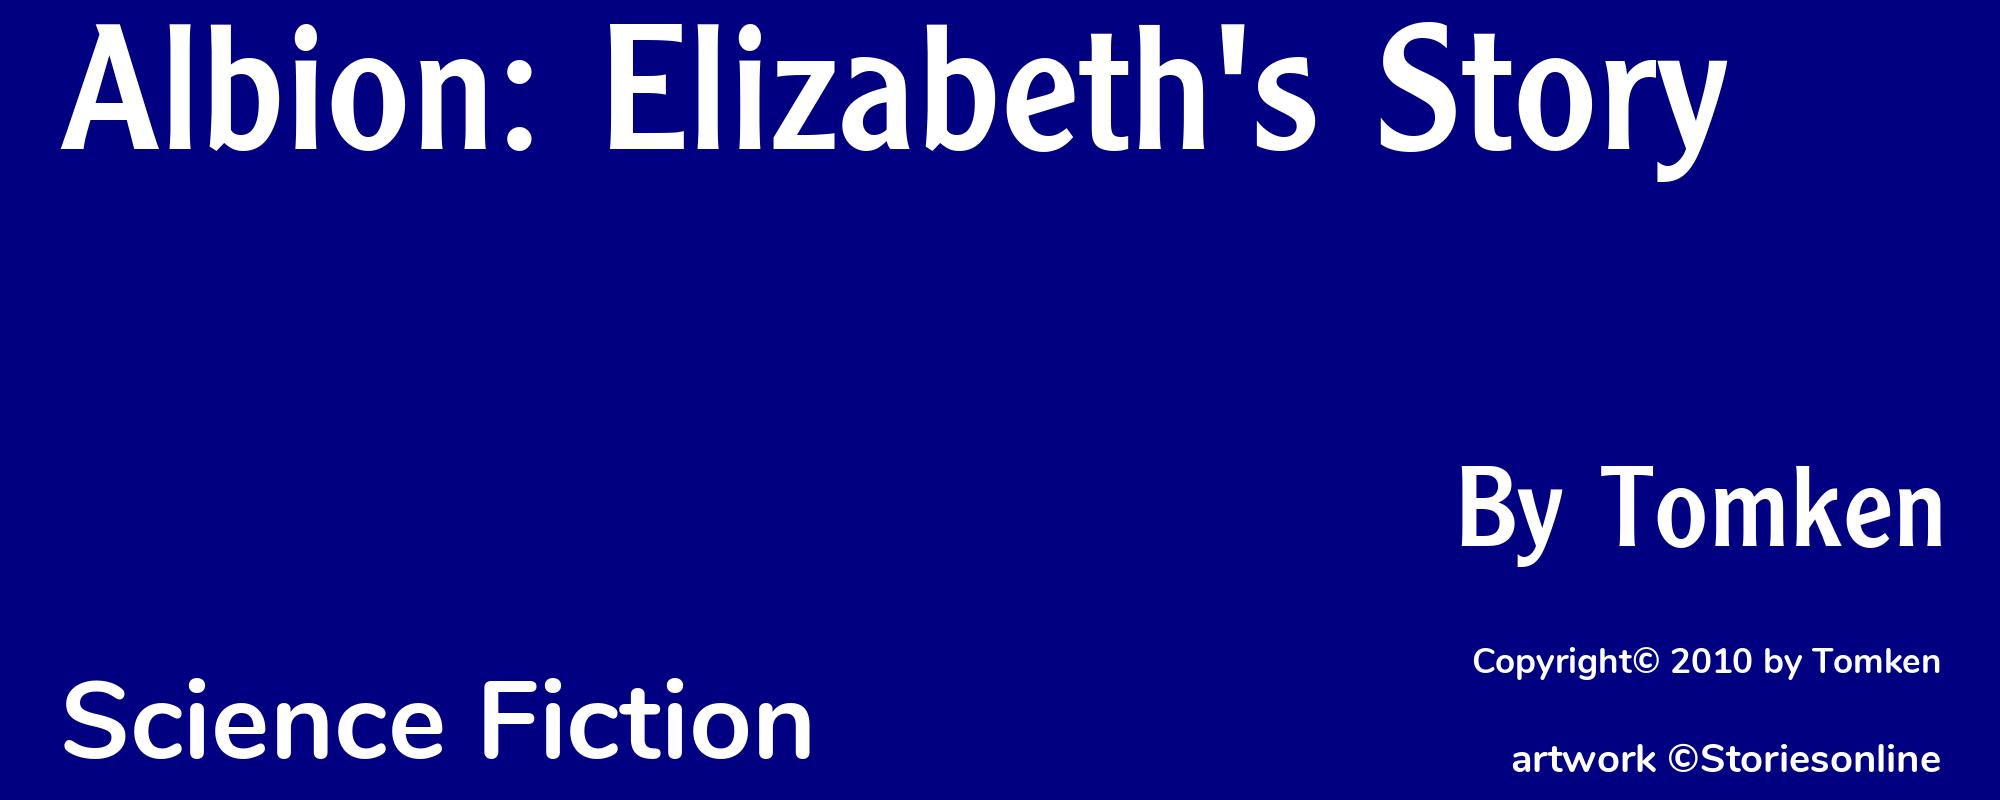 Albion: Elizabeth's Story - Cover